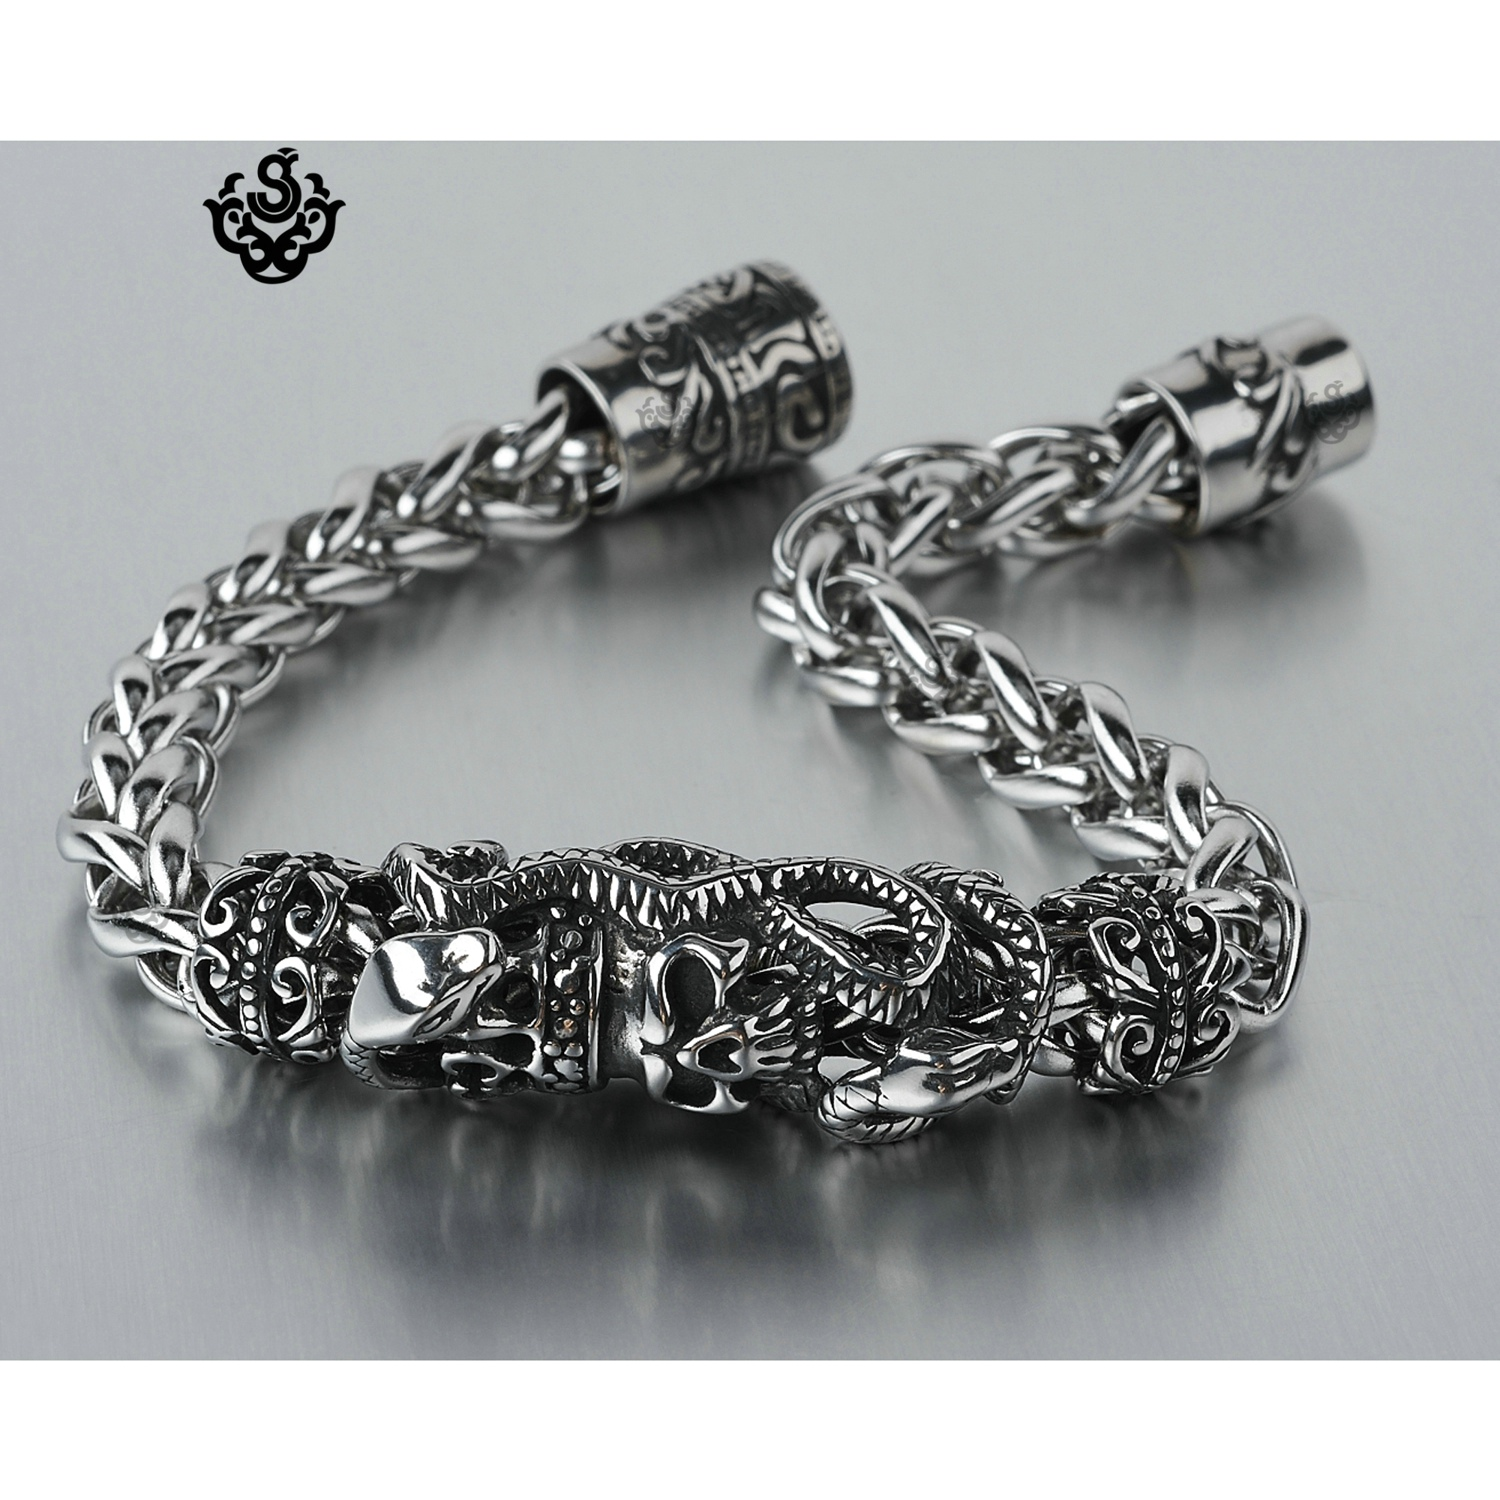 Silver bracelet bikies chain stainless steel skull crown snake black silicon new